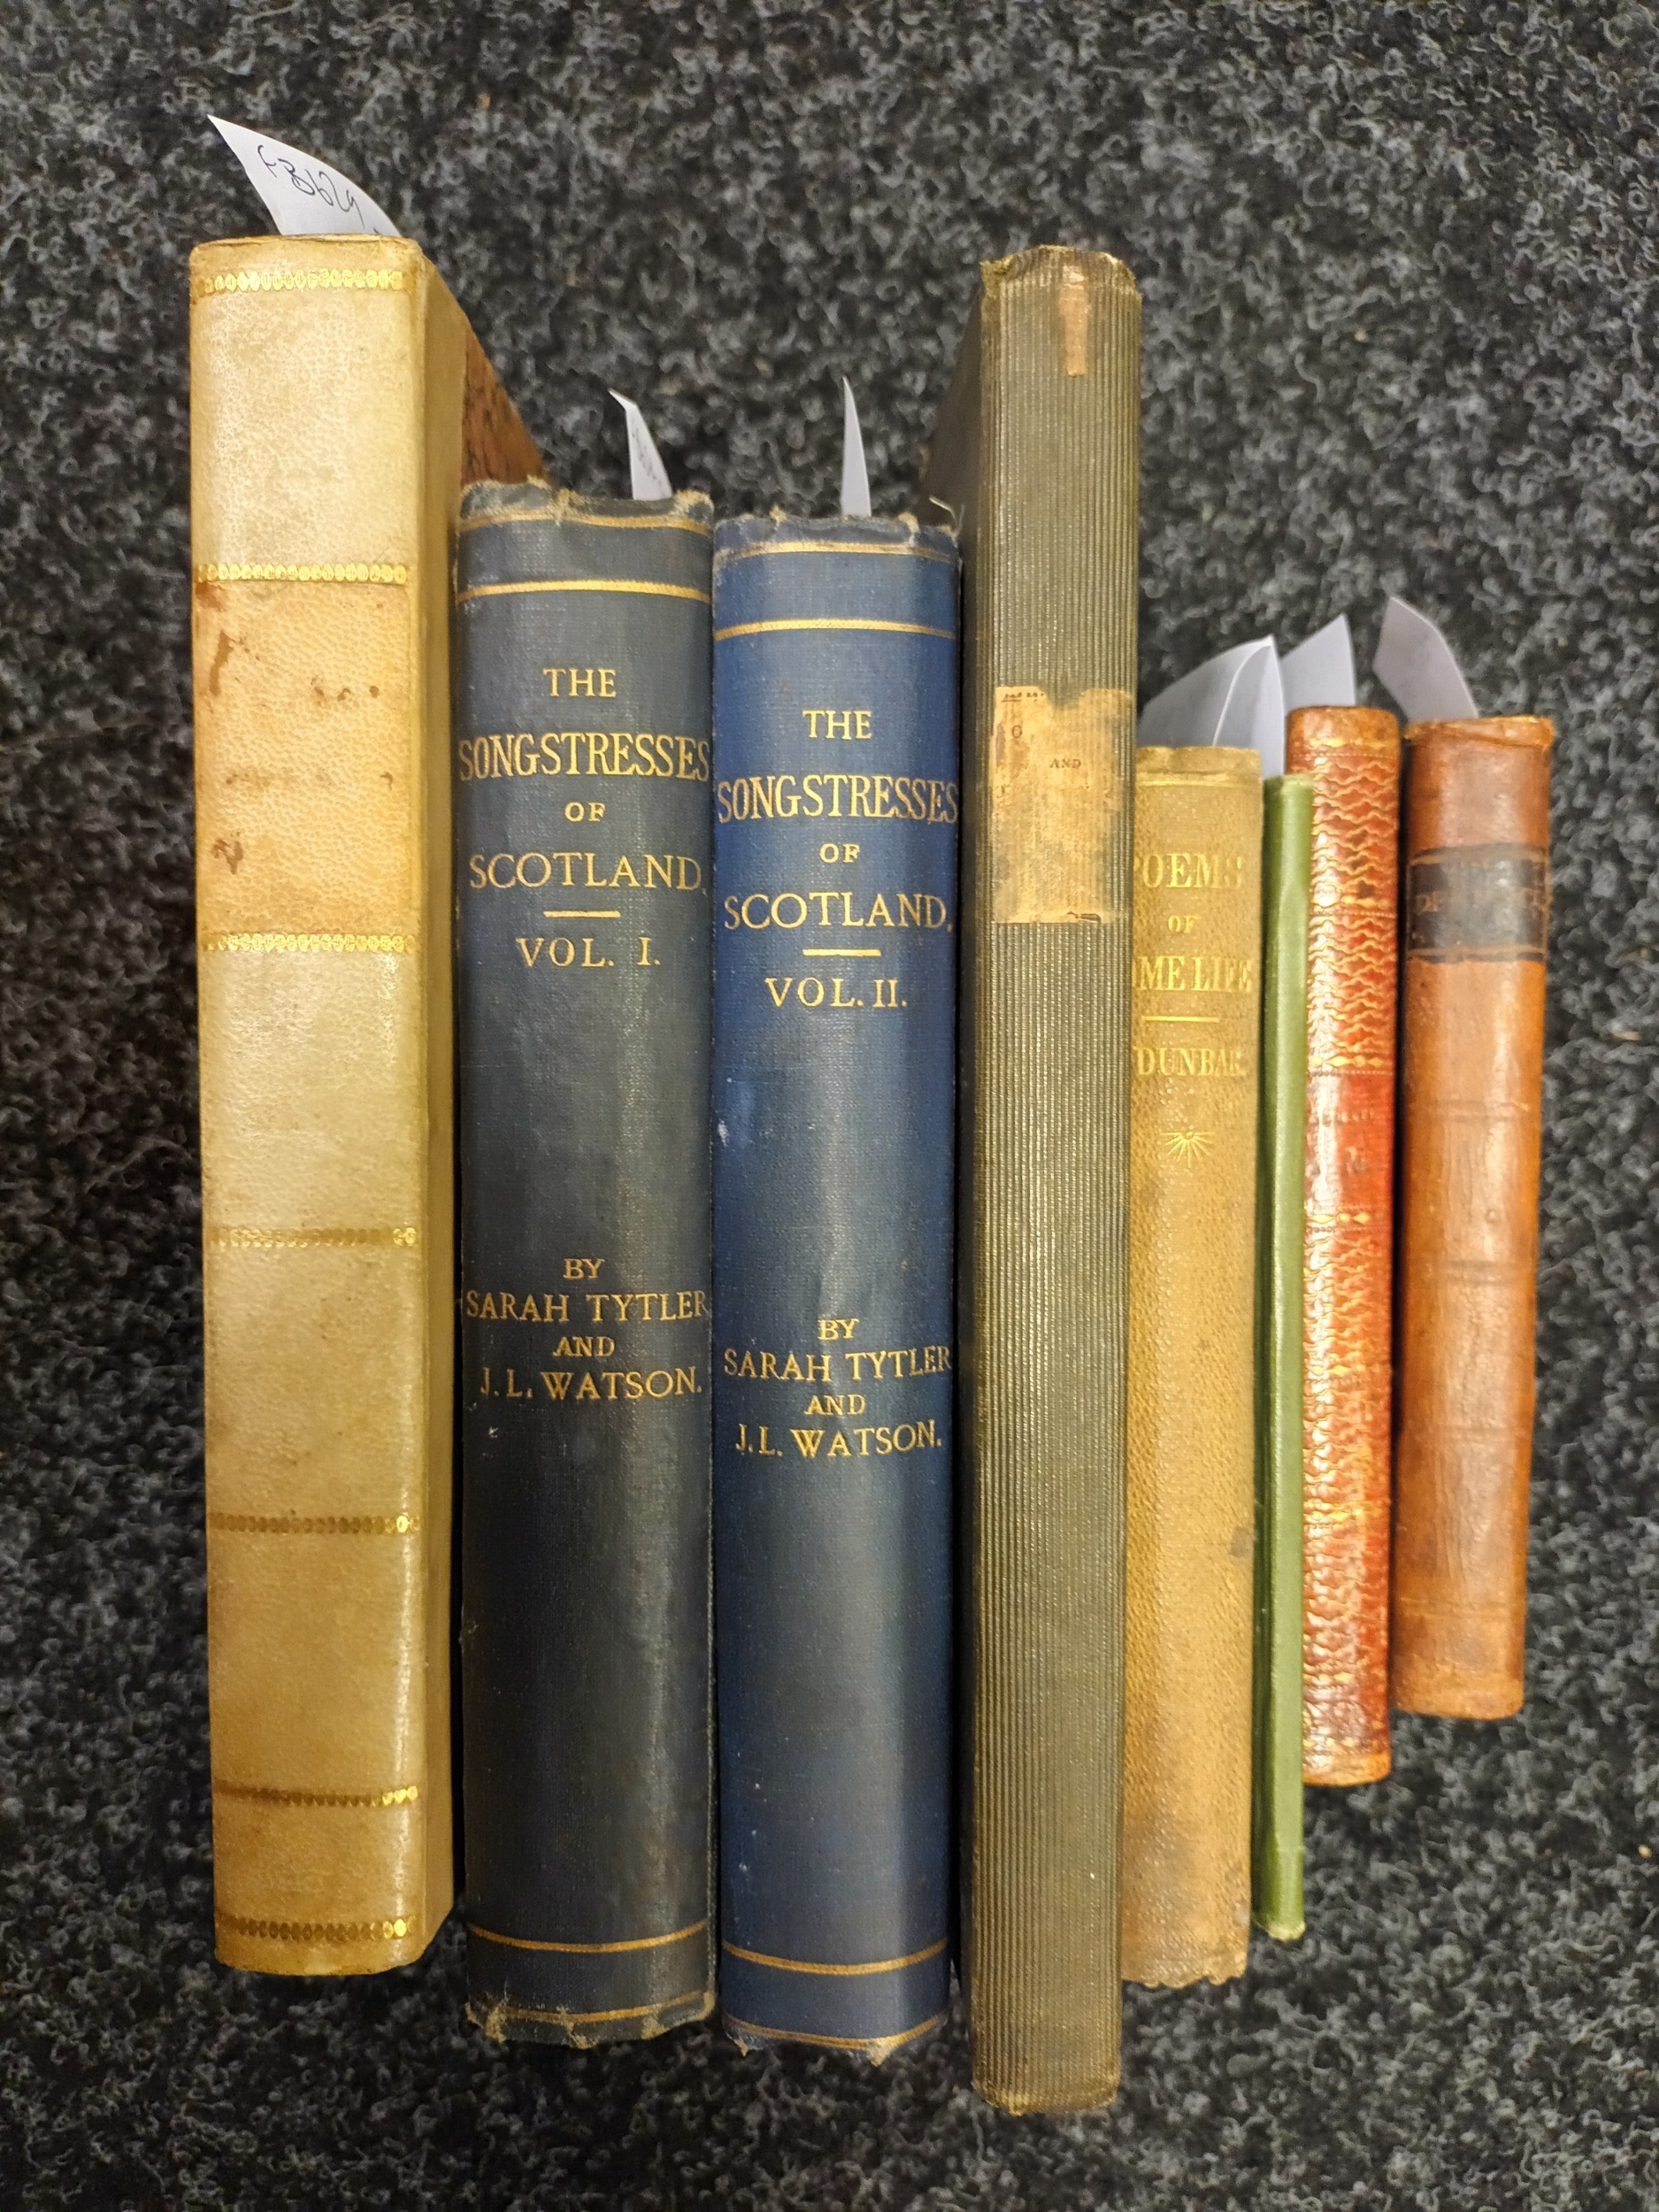 Scottish literature-Miller, James- St Baldred of the Bass. Edinburgh, 1824. 8vo, engraved